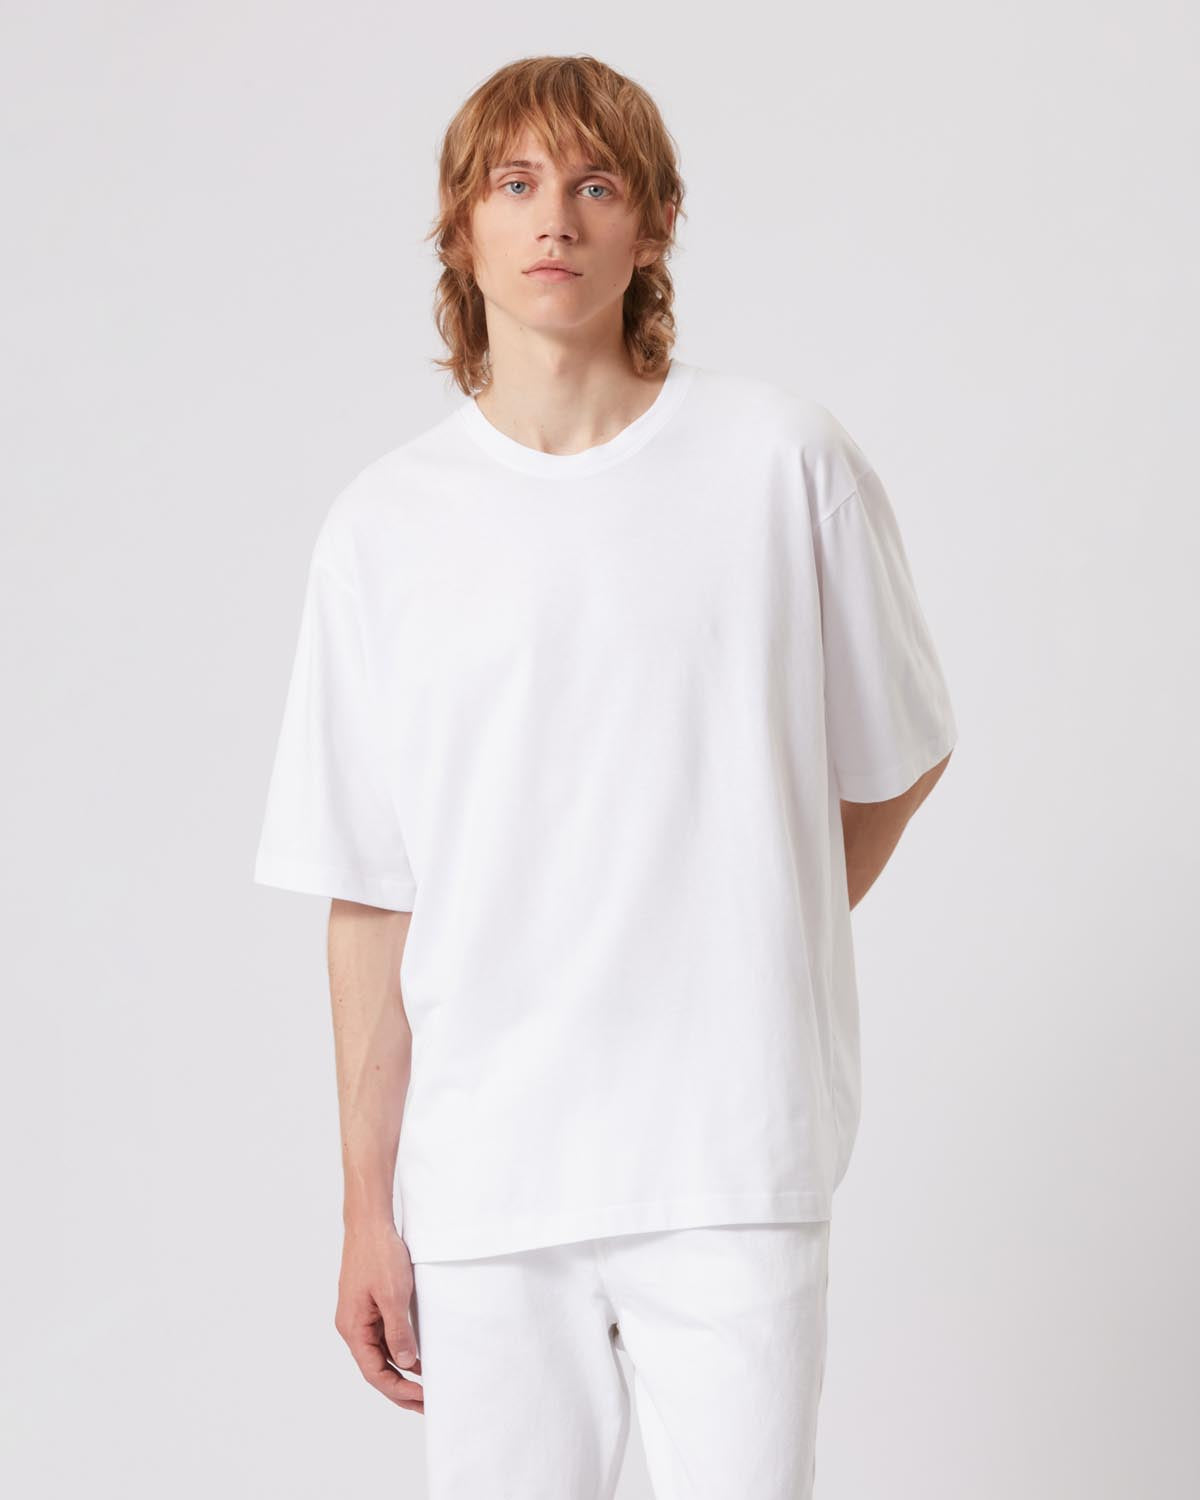 T-shirt guizy „marant“ aus baumwolle Man Weiß 3